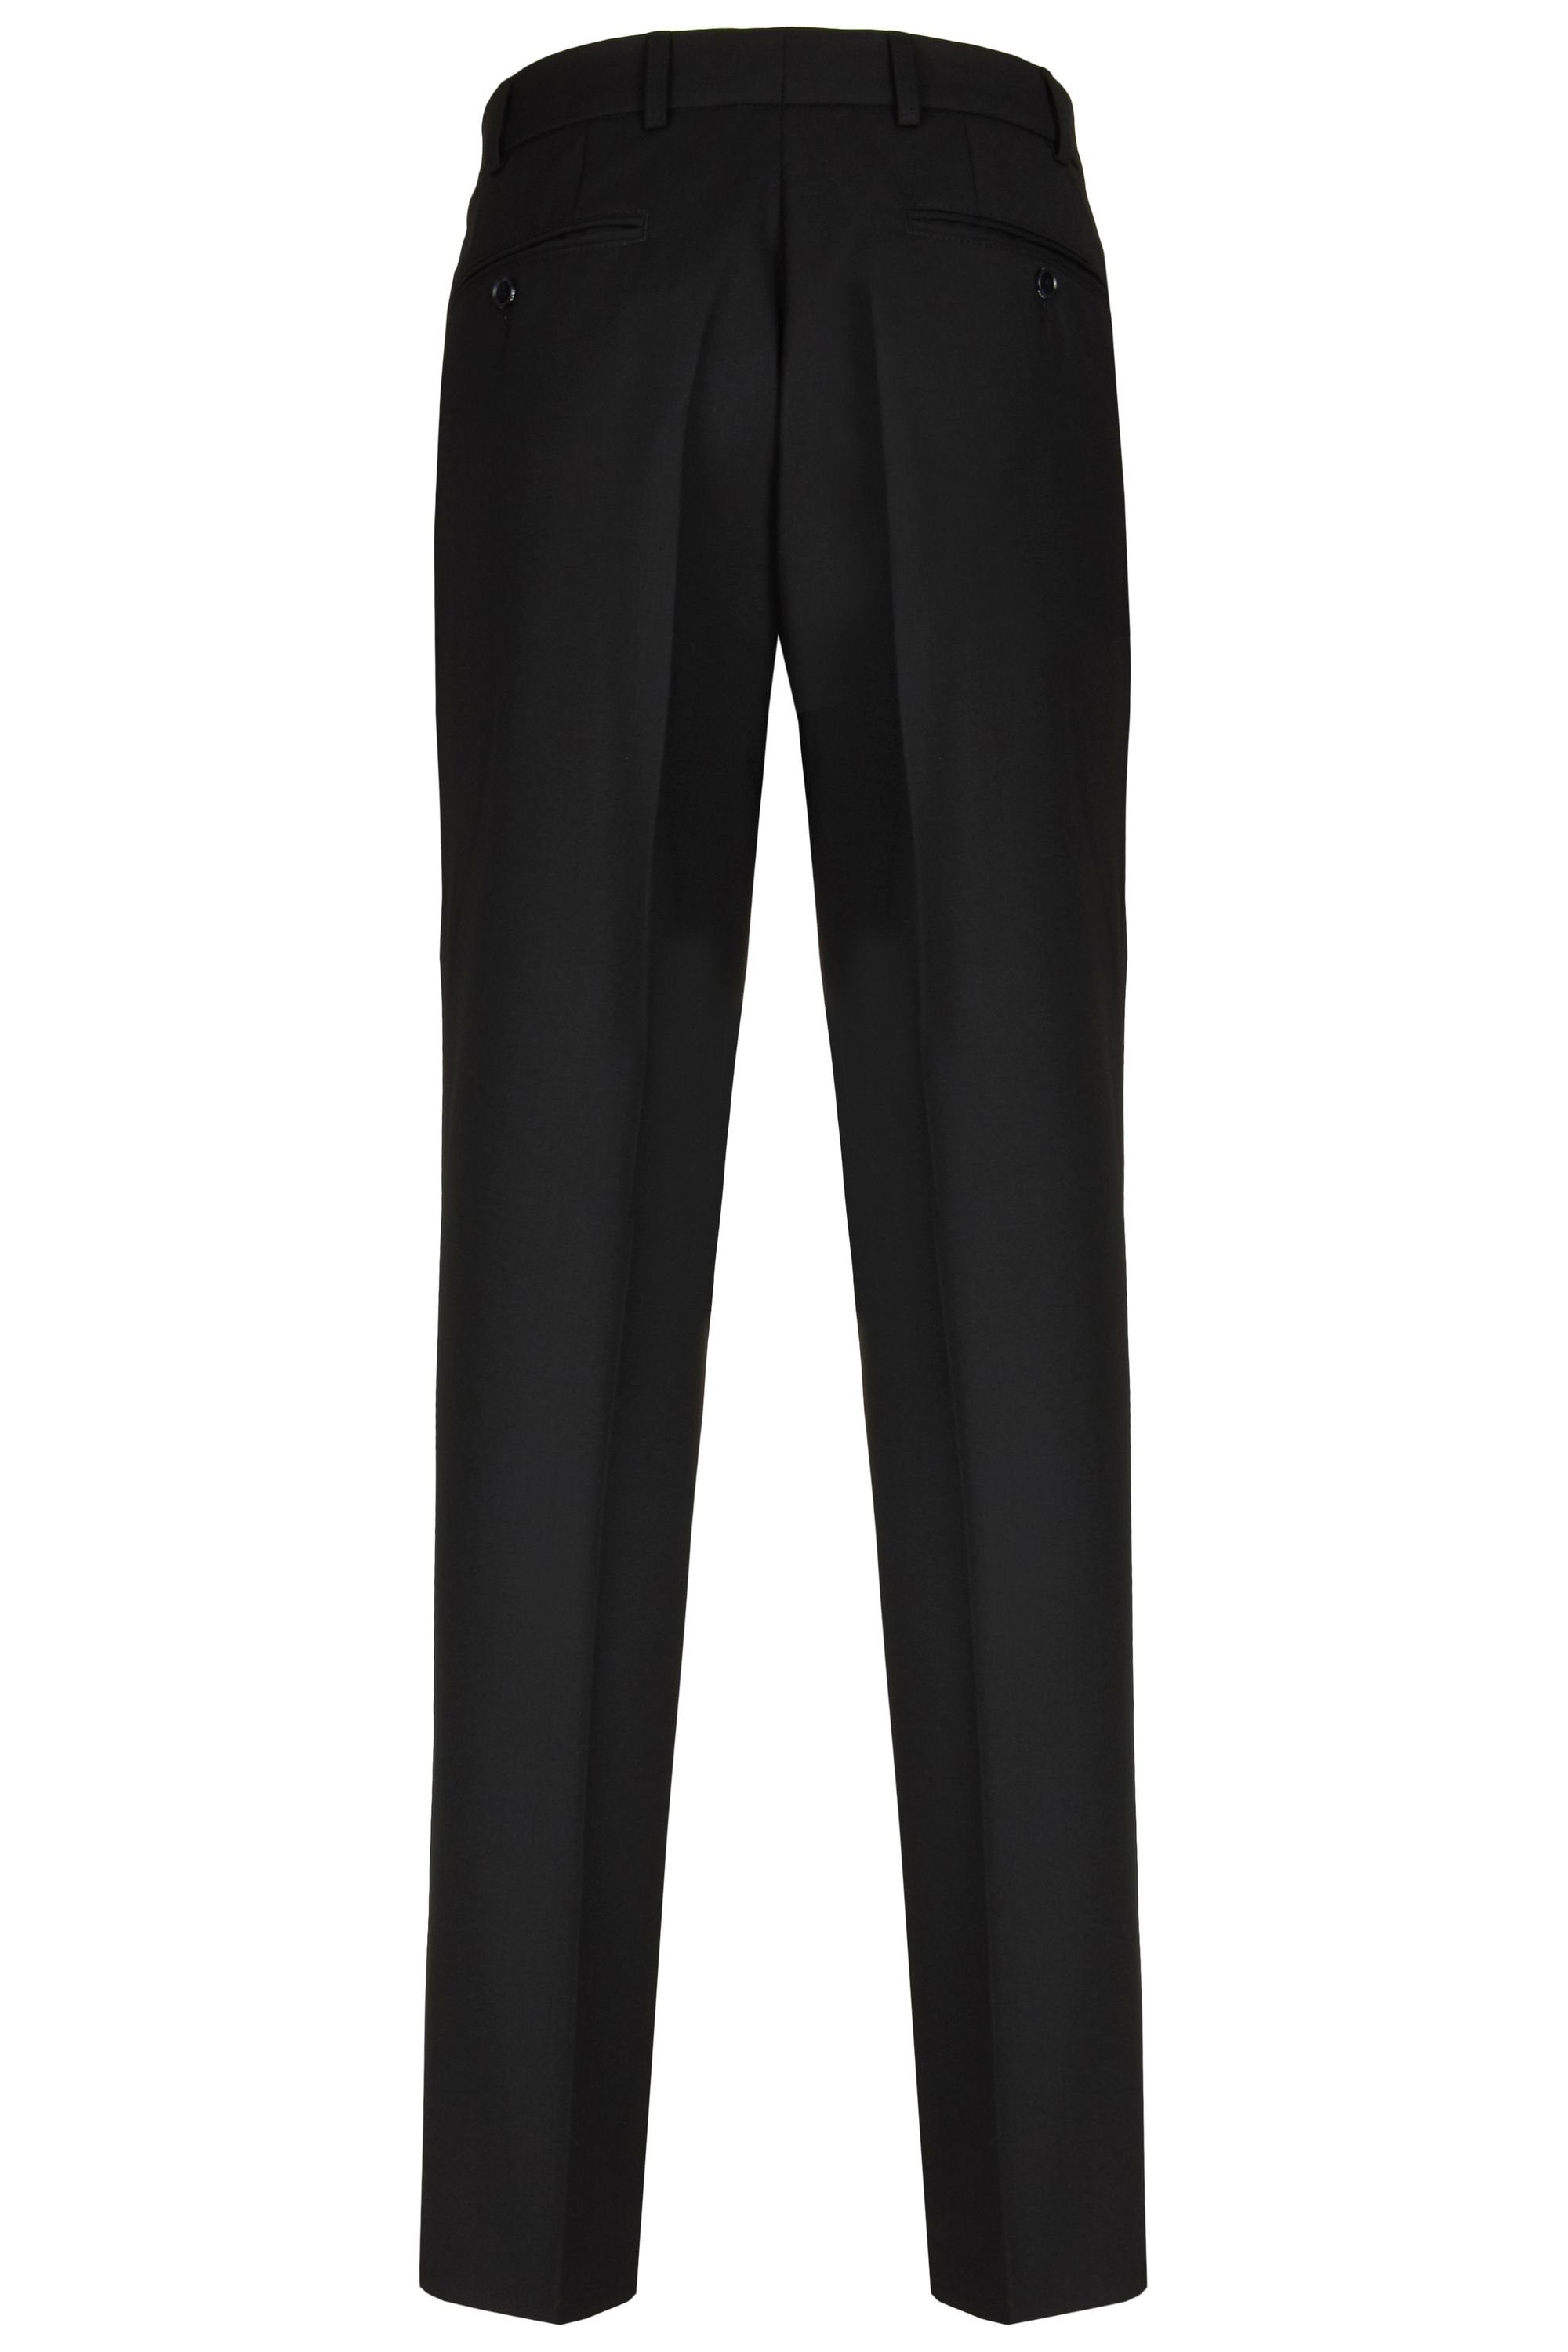 aubi: Stoffhose aubi Flat schwarz Businesshose Modell Front Herren Anzughose 26 Perfect (50) Fit